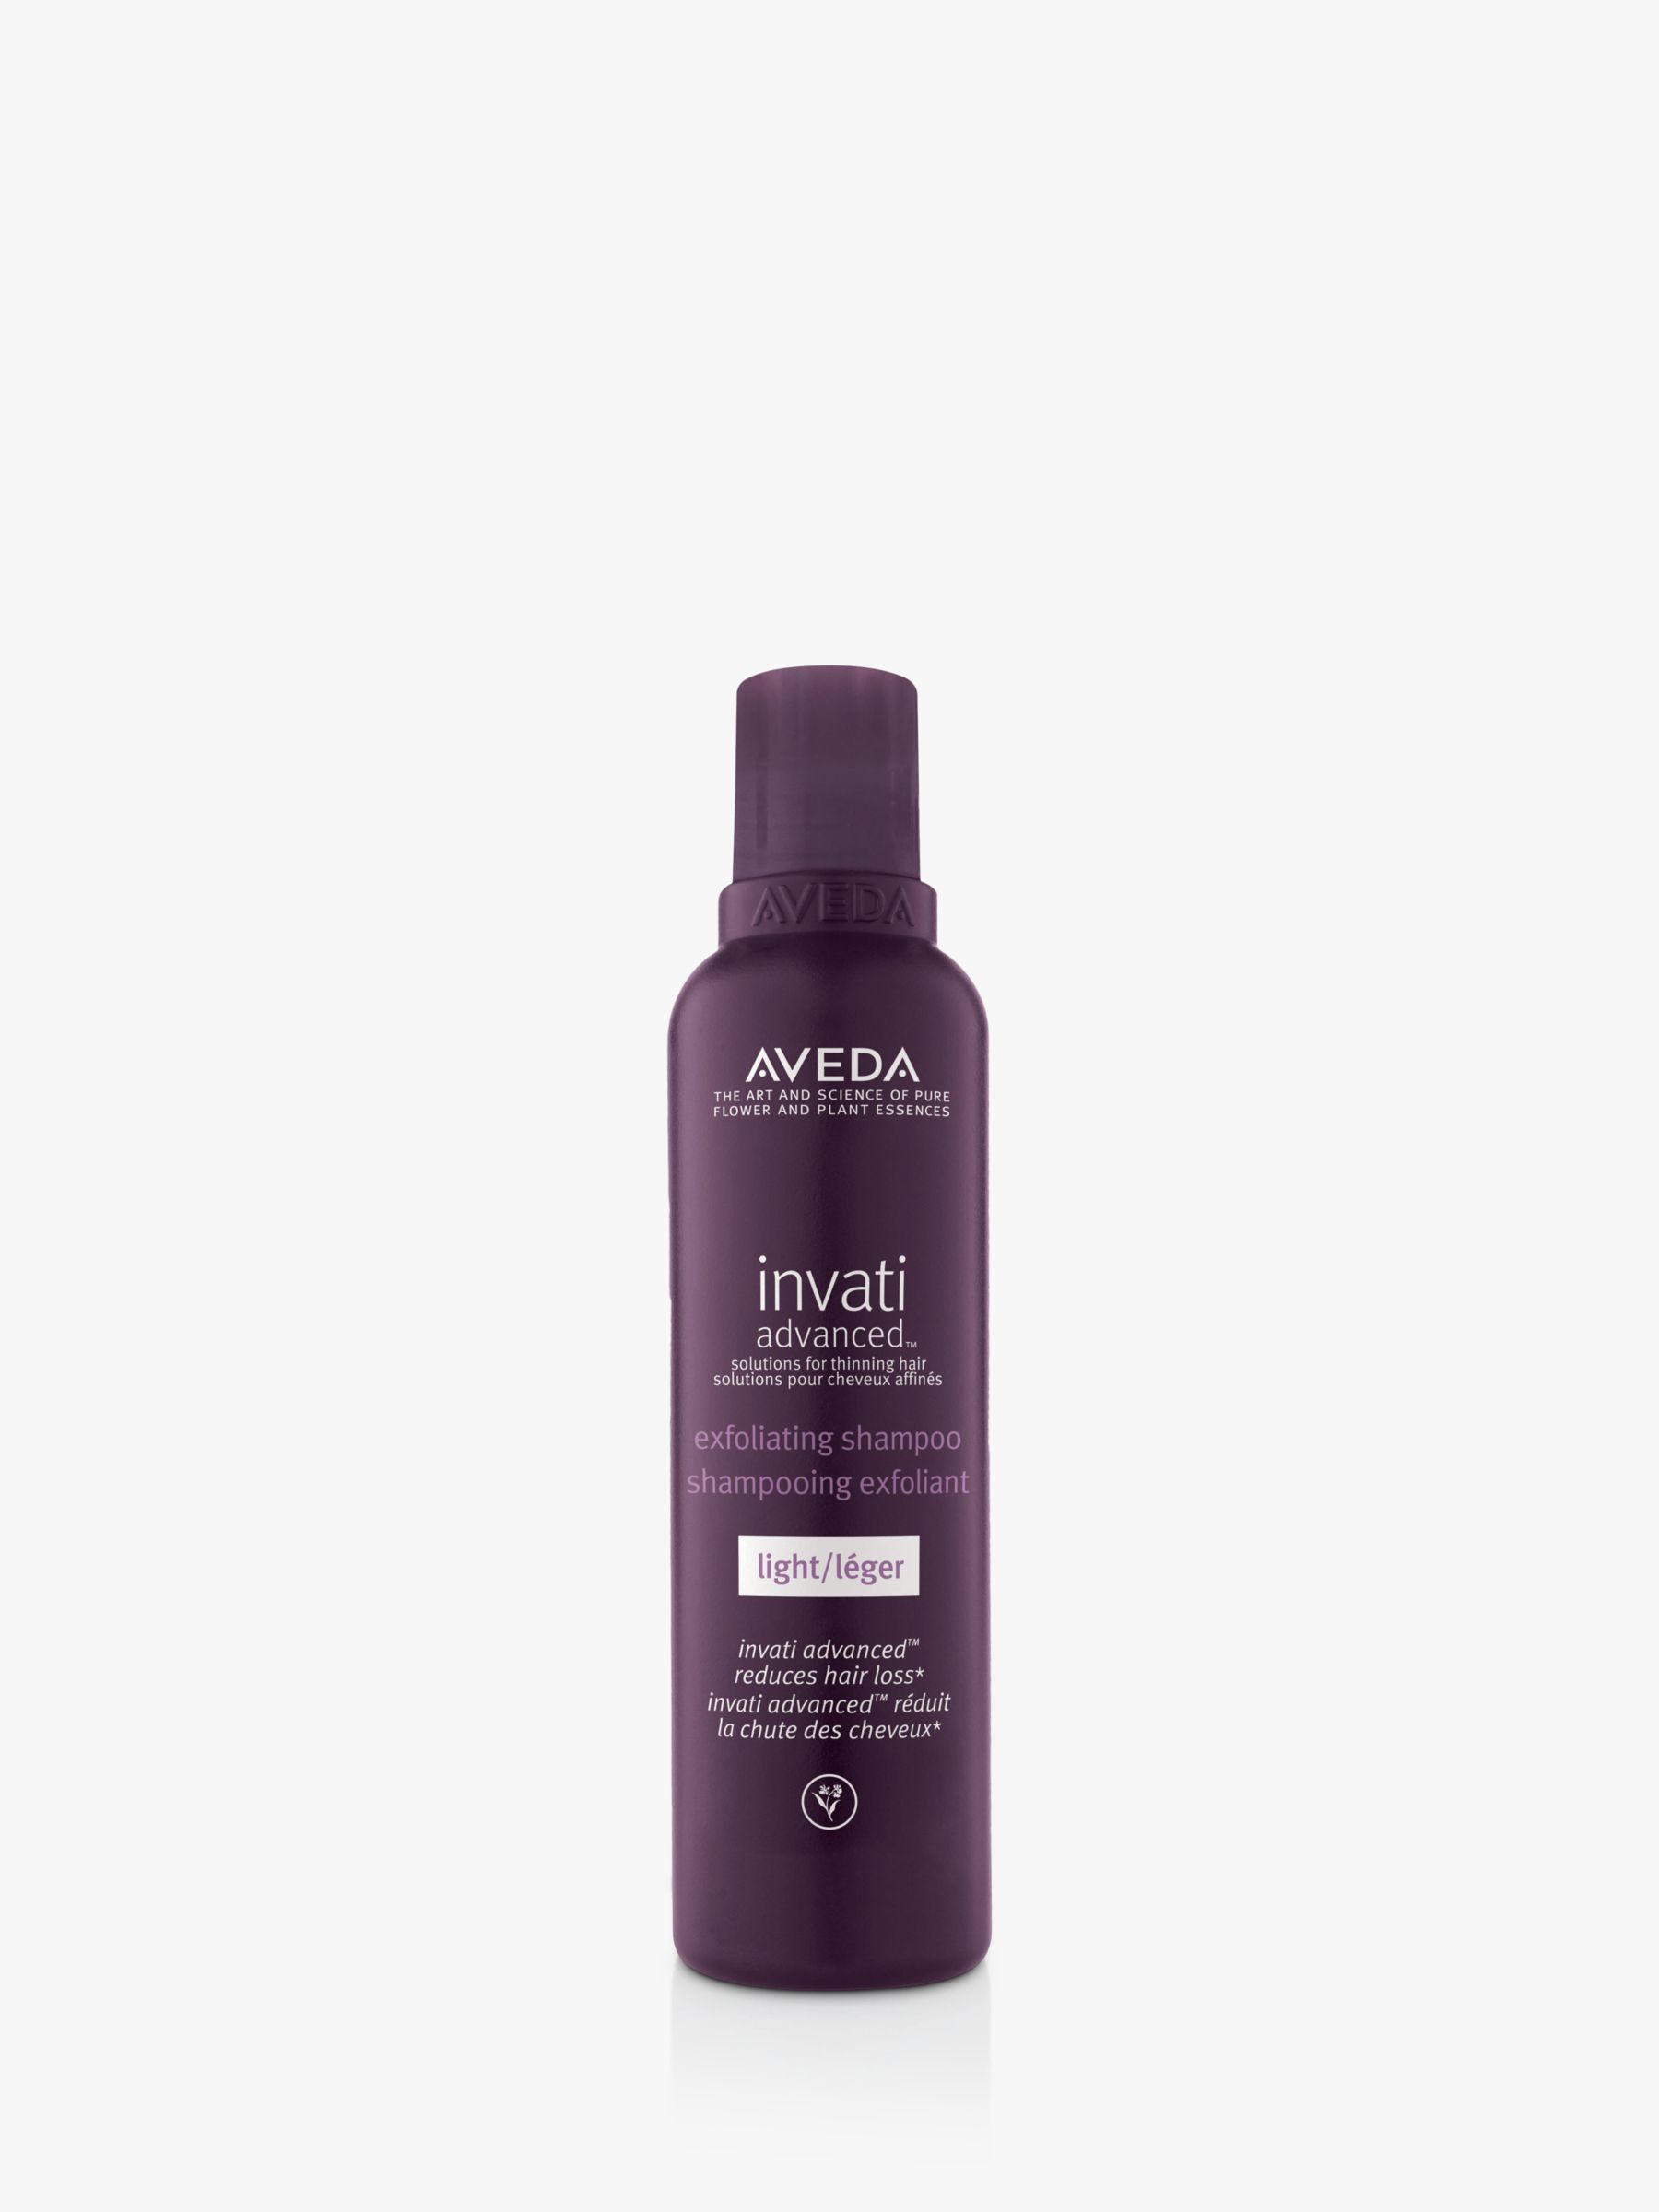 Aveda Invati Advanced™ Exfoliating Shampoo, Light, 200ml